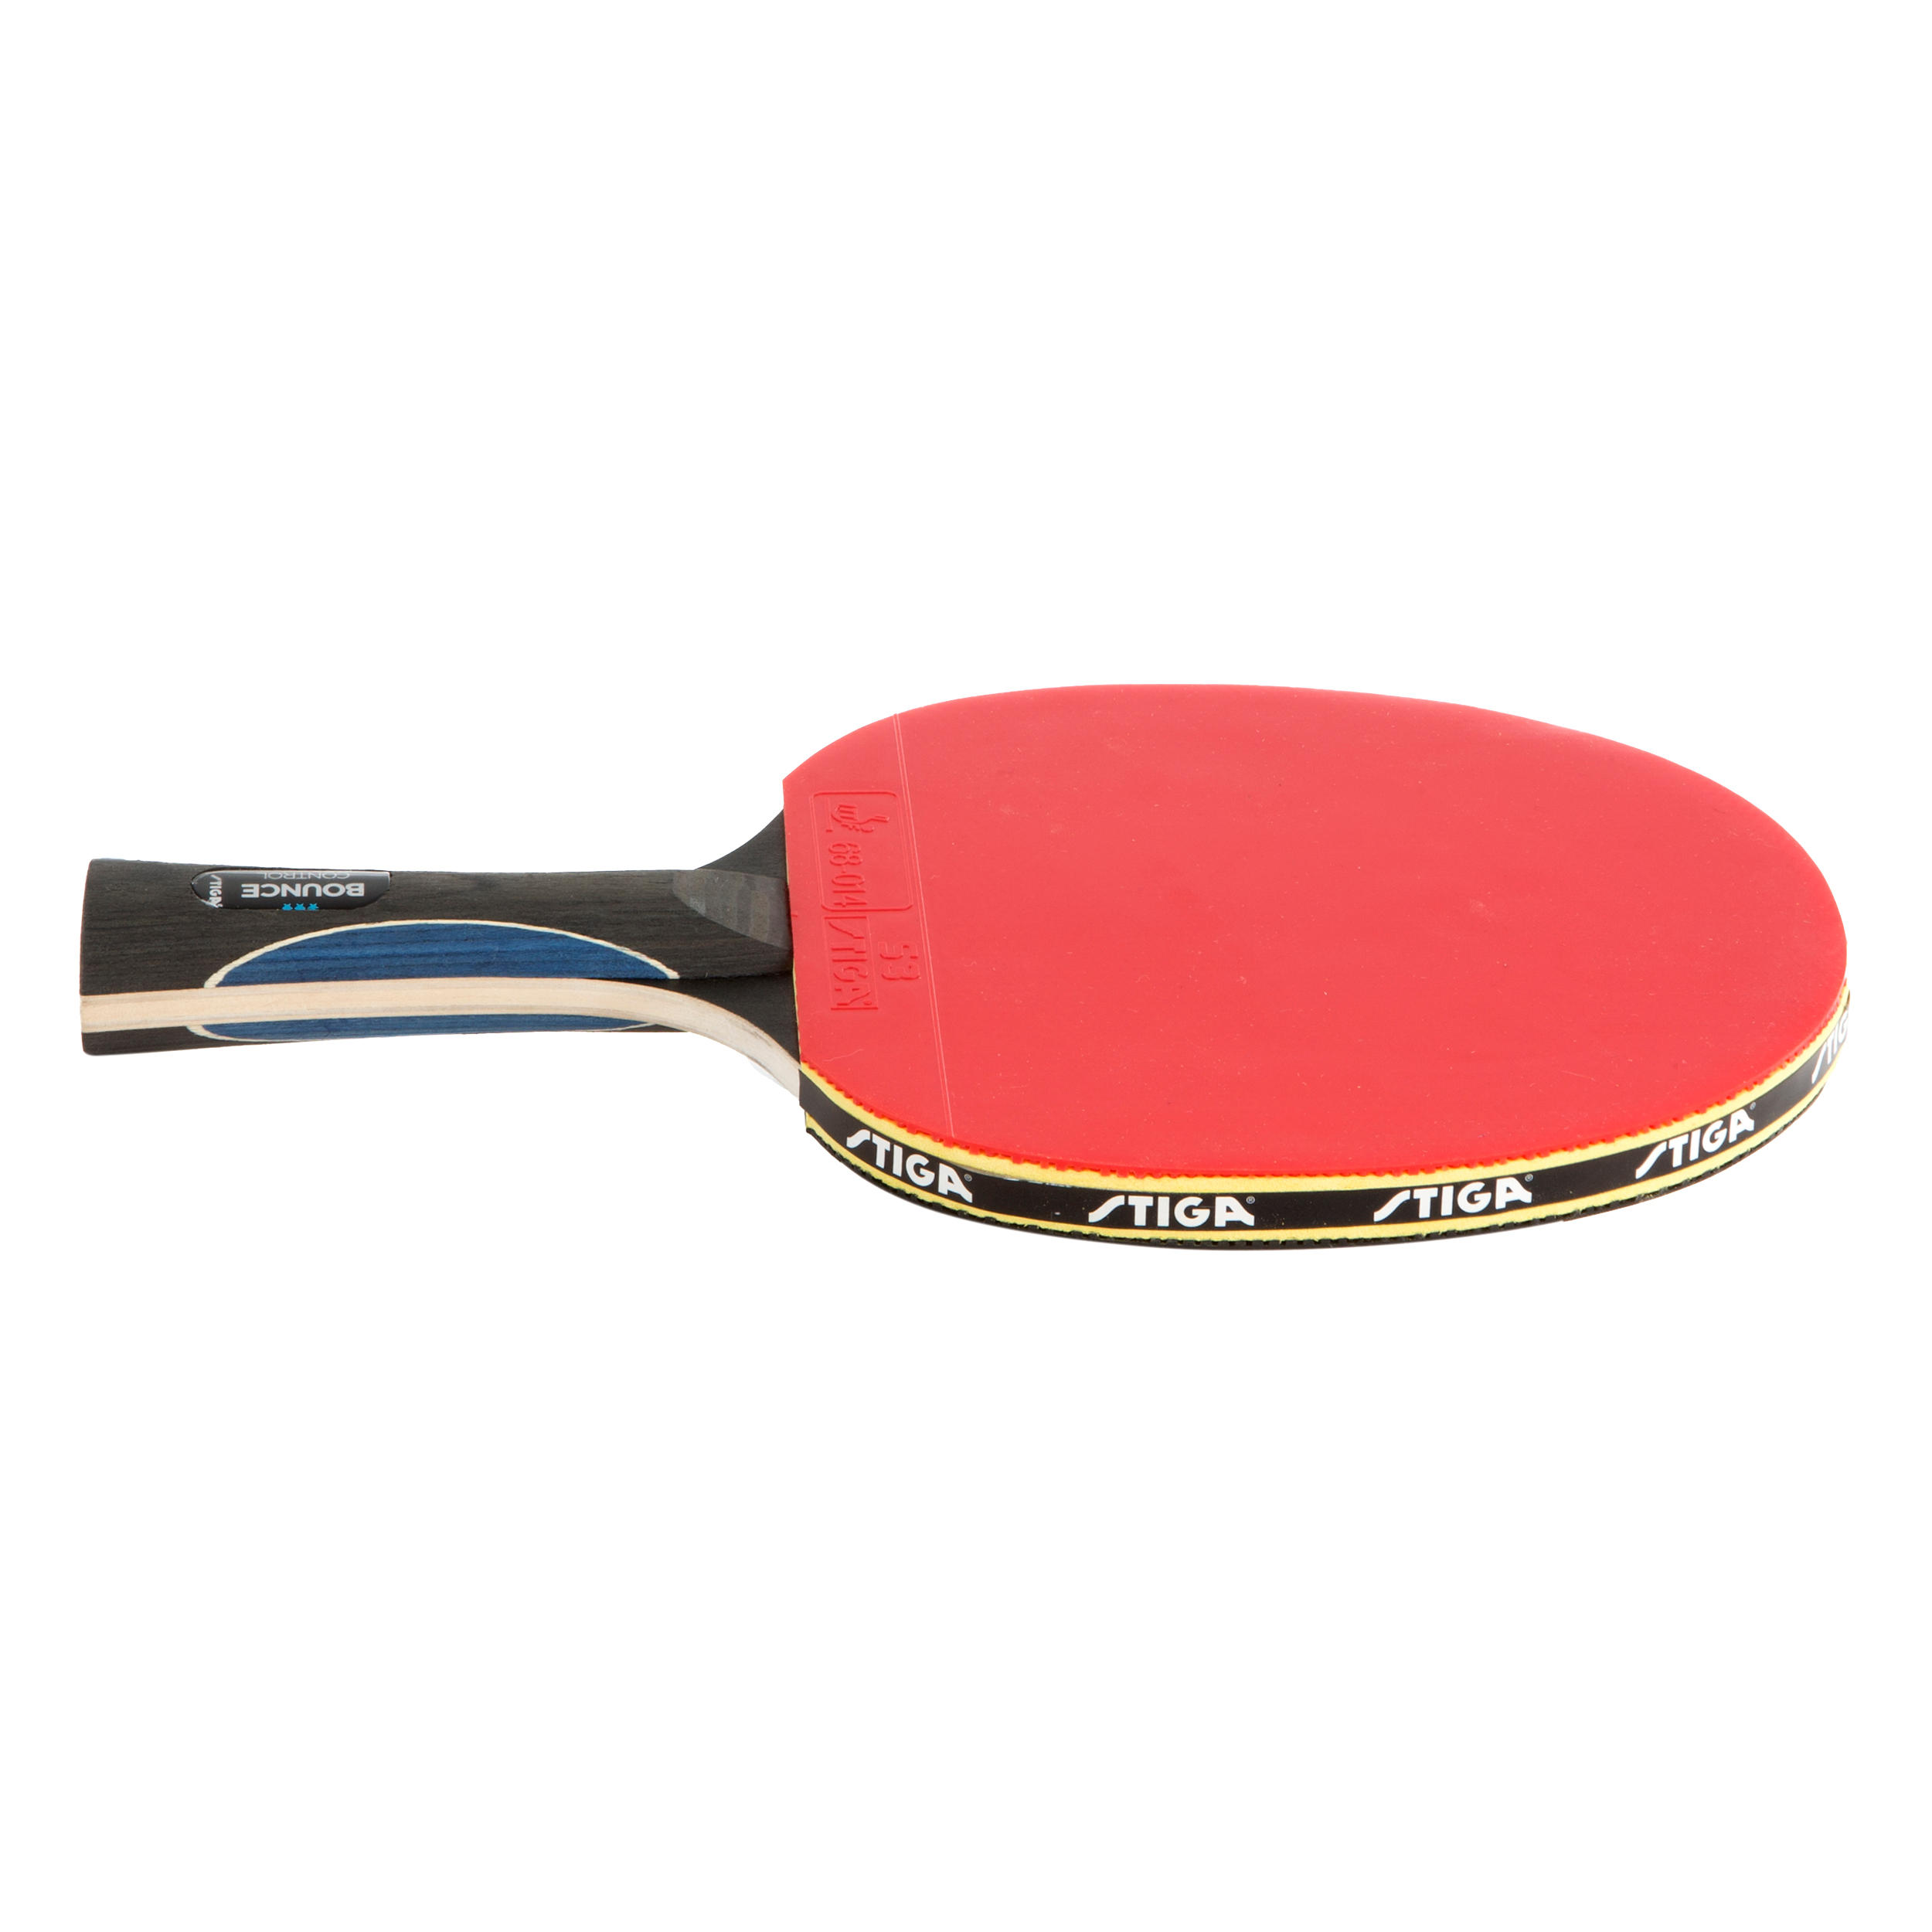 Club Table Tennis Bat Bounce Control 3* 14/15